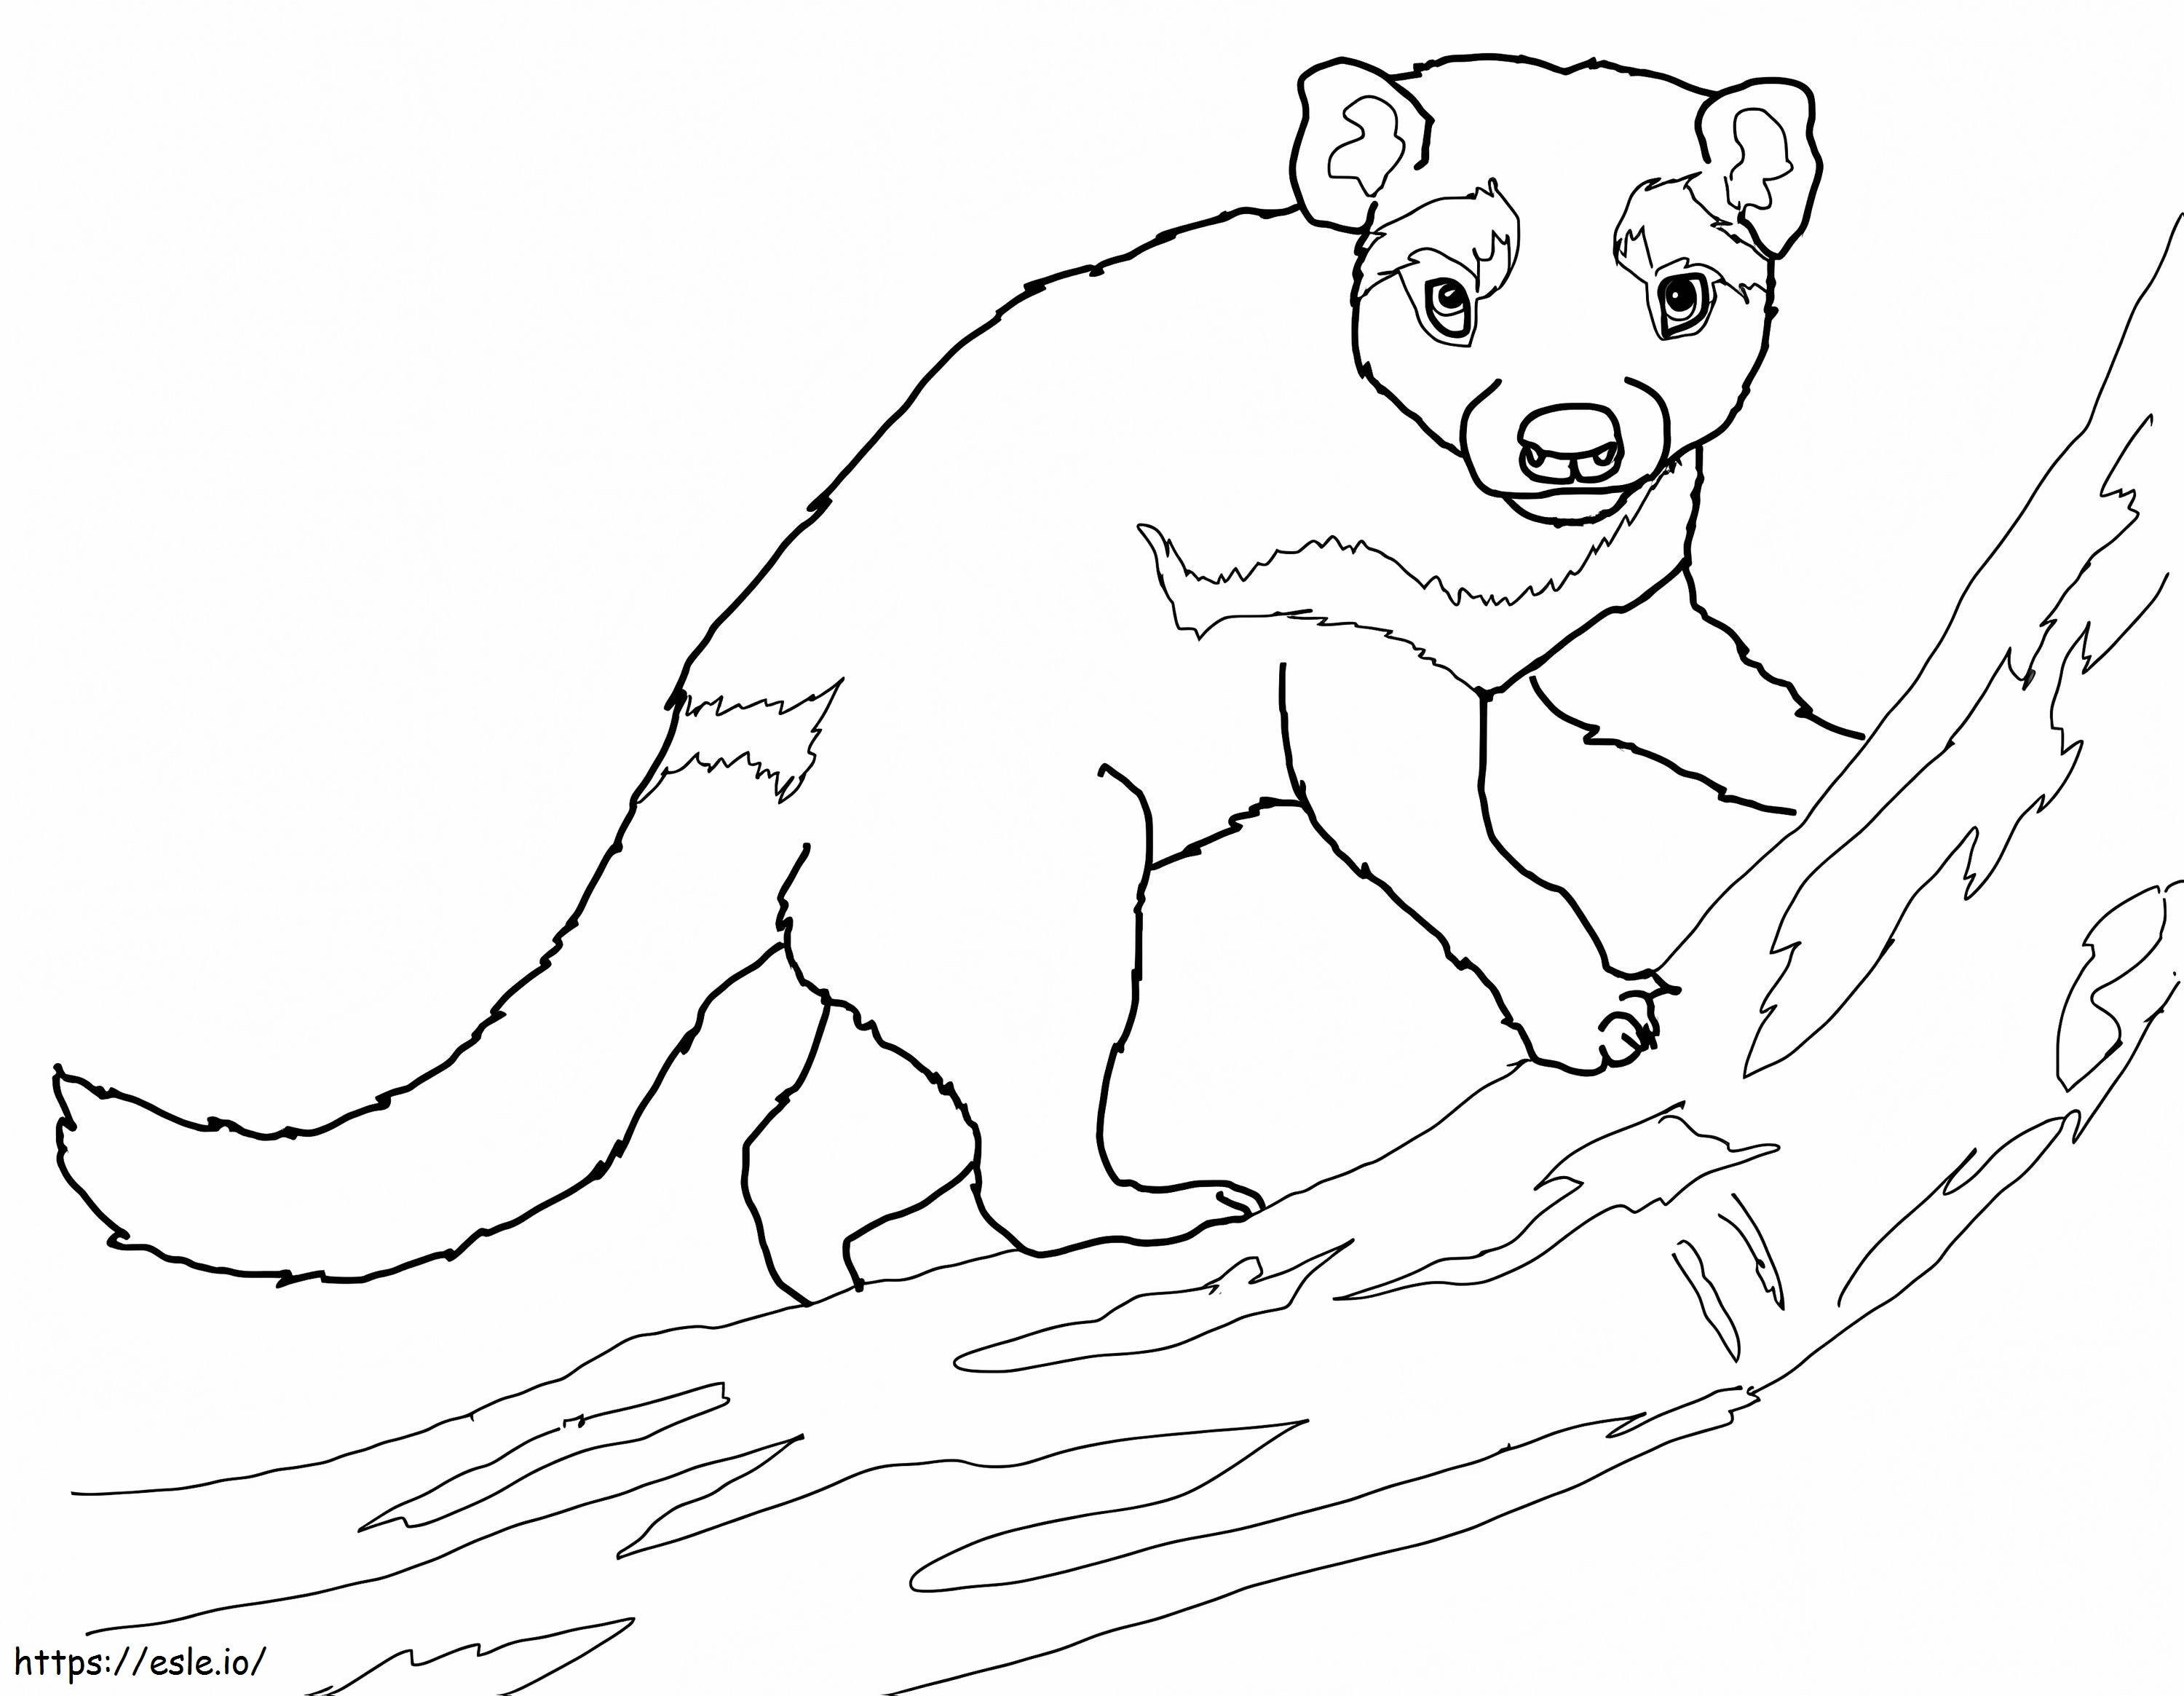 Tasmanian Devil On Branch coloring page